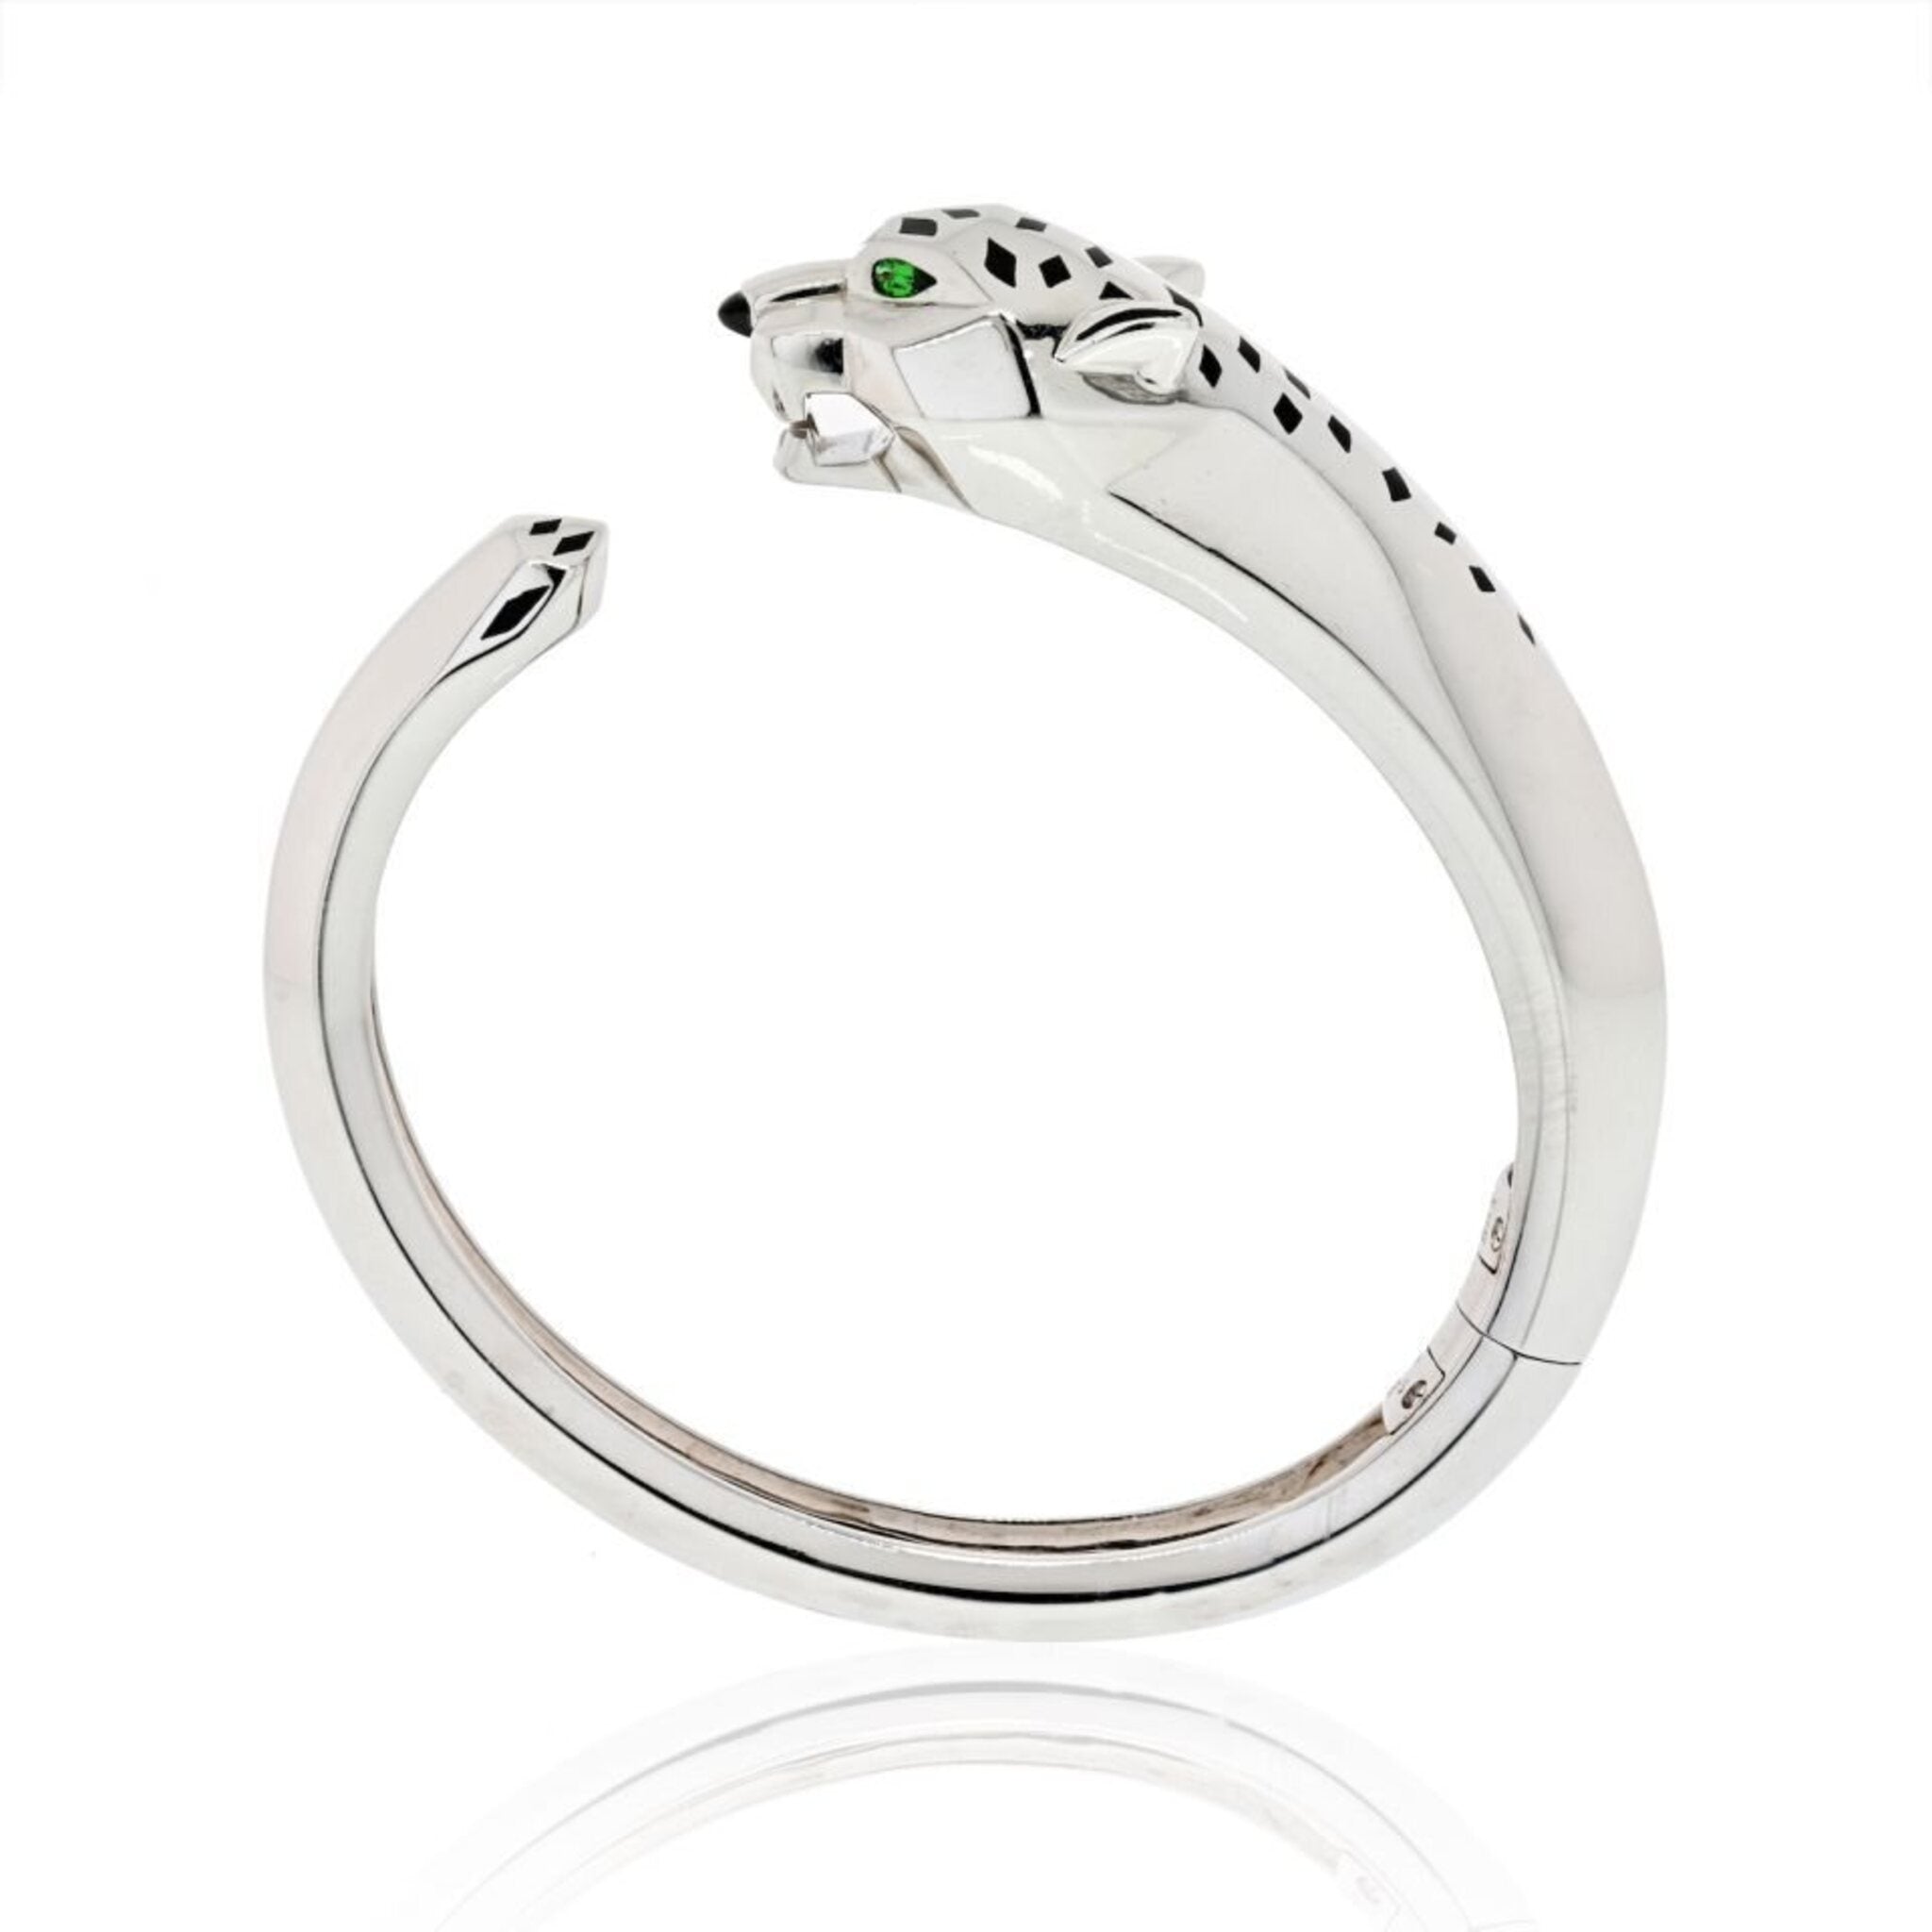 Purchase the High-Quality 950 Platinum Bracelets | GLAMIRA.com